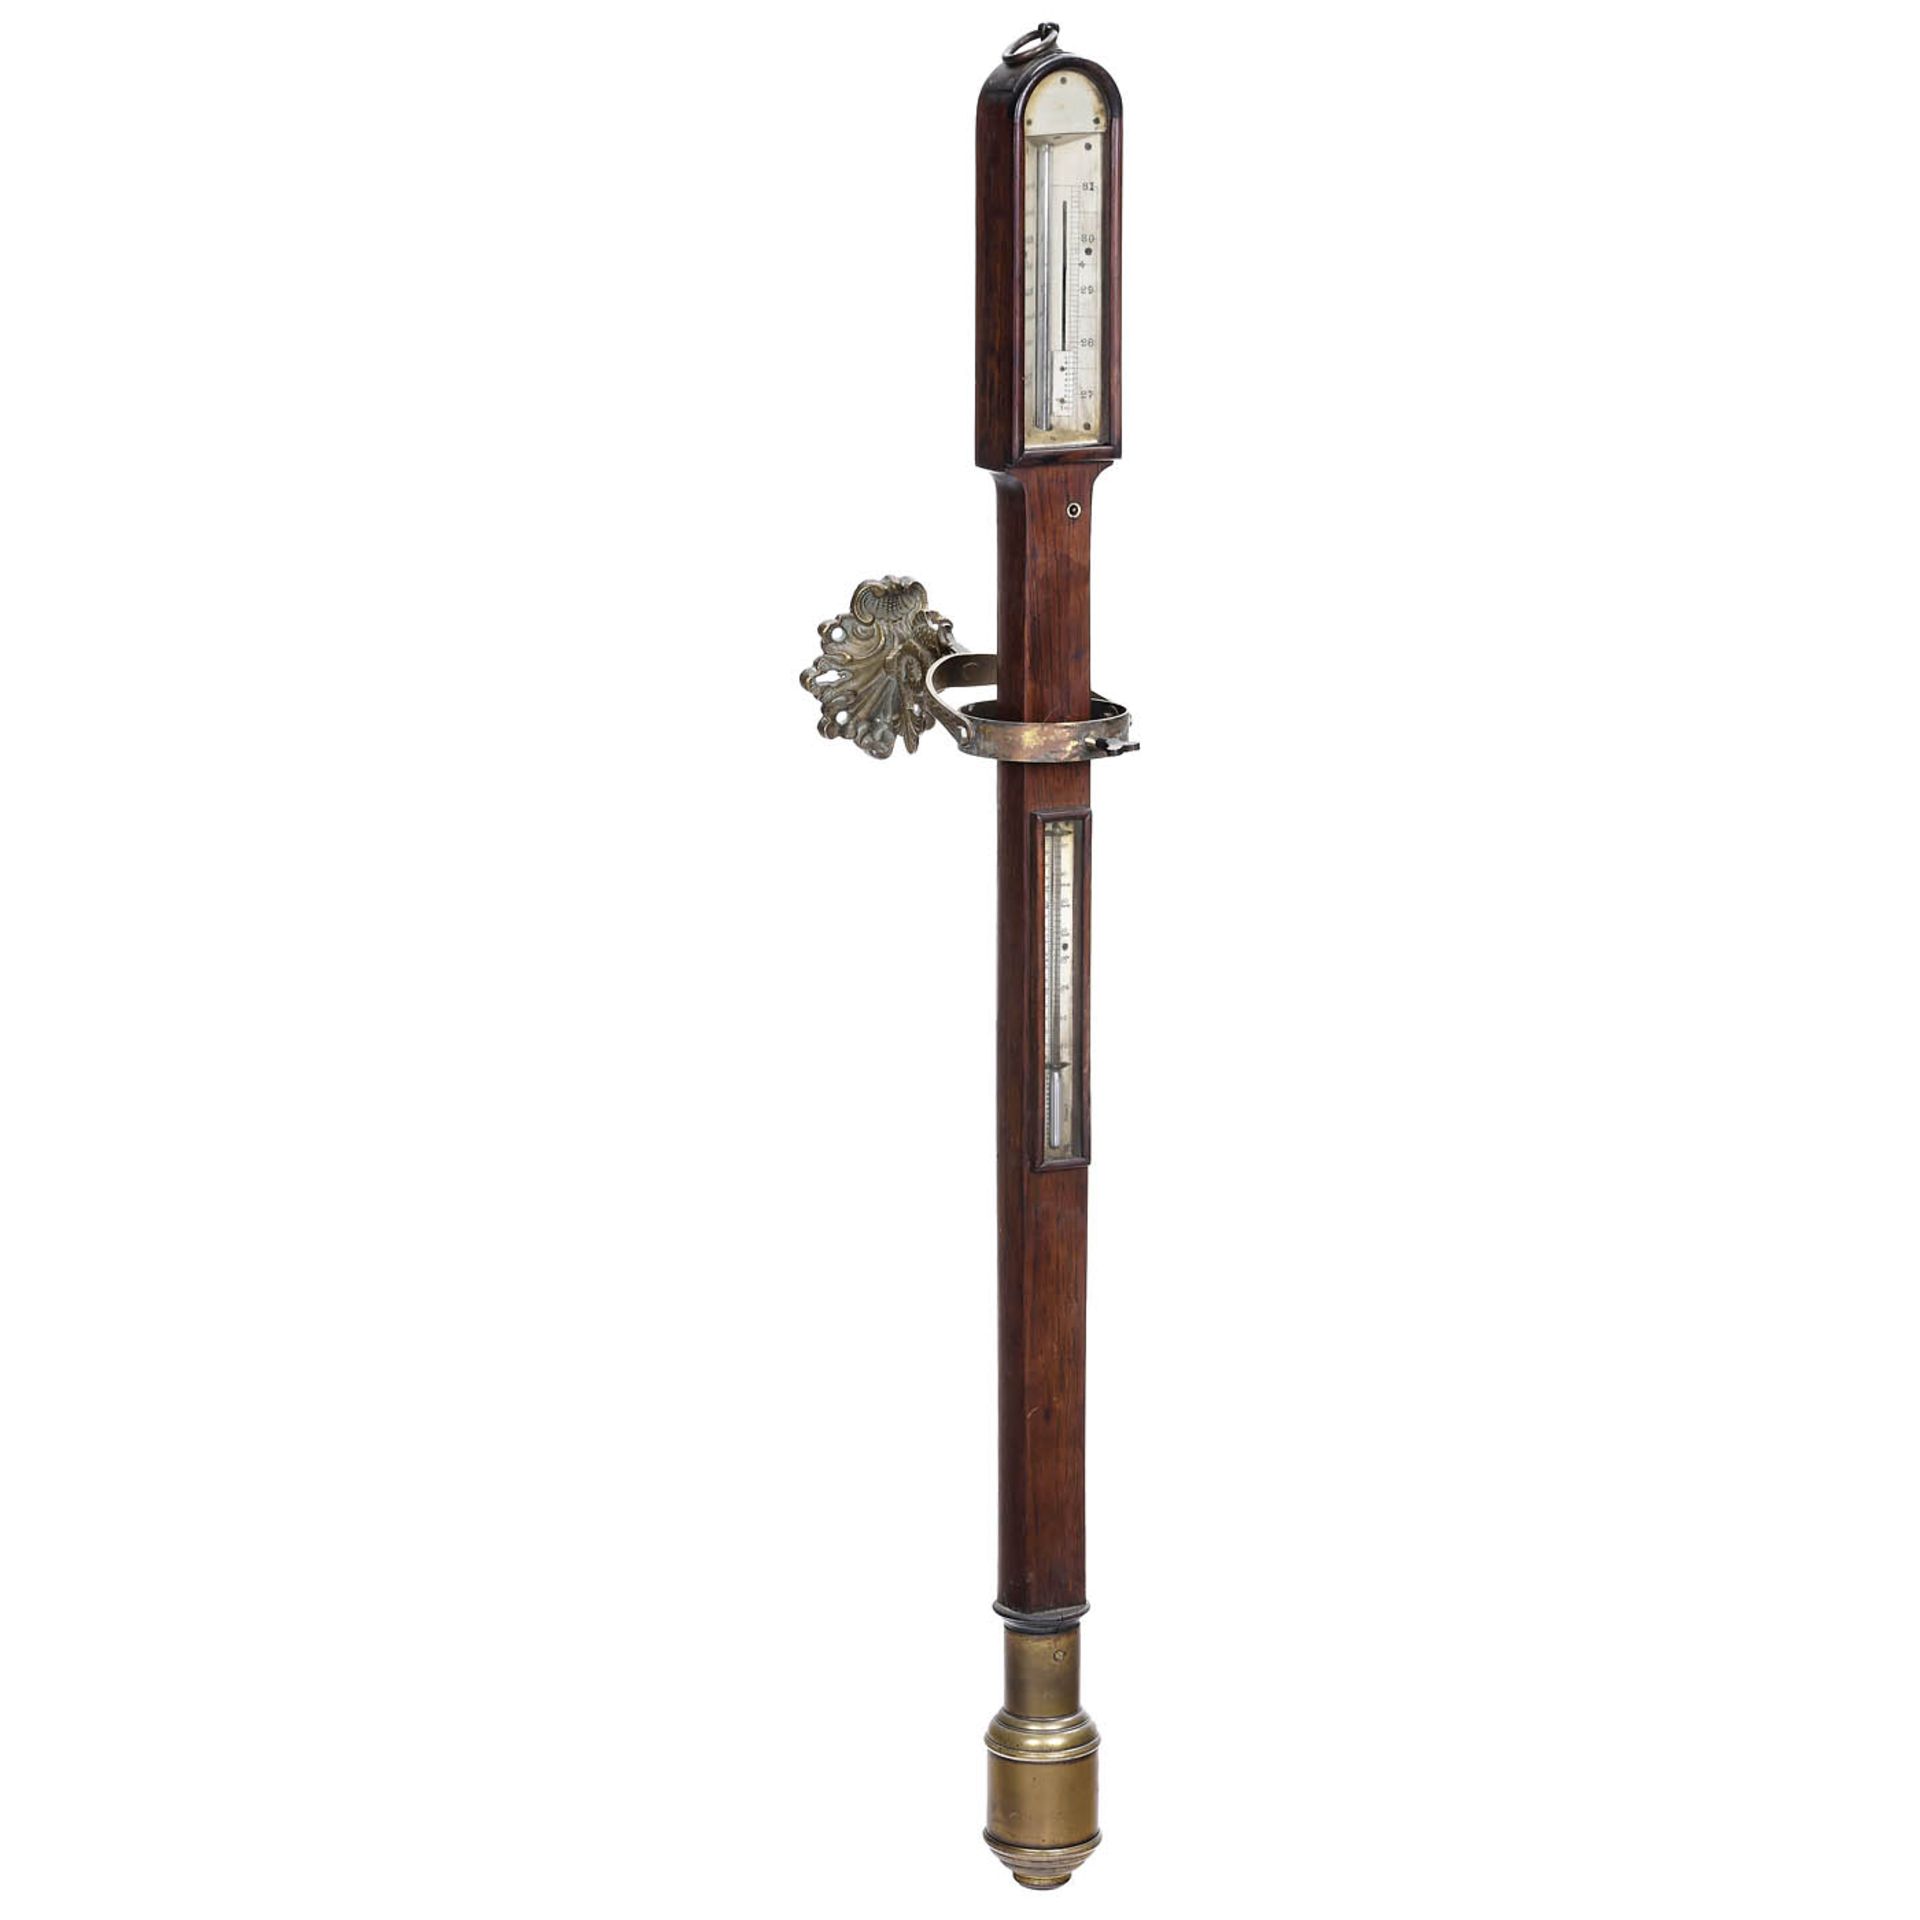 Gimbal-Mounted Marine Stick Barometer, c. 1830